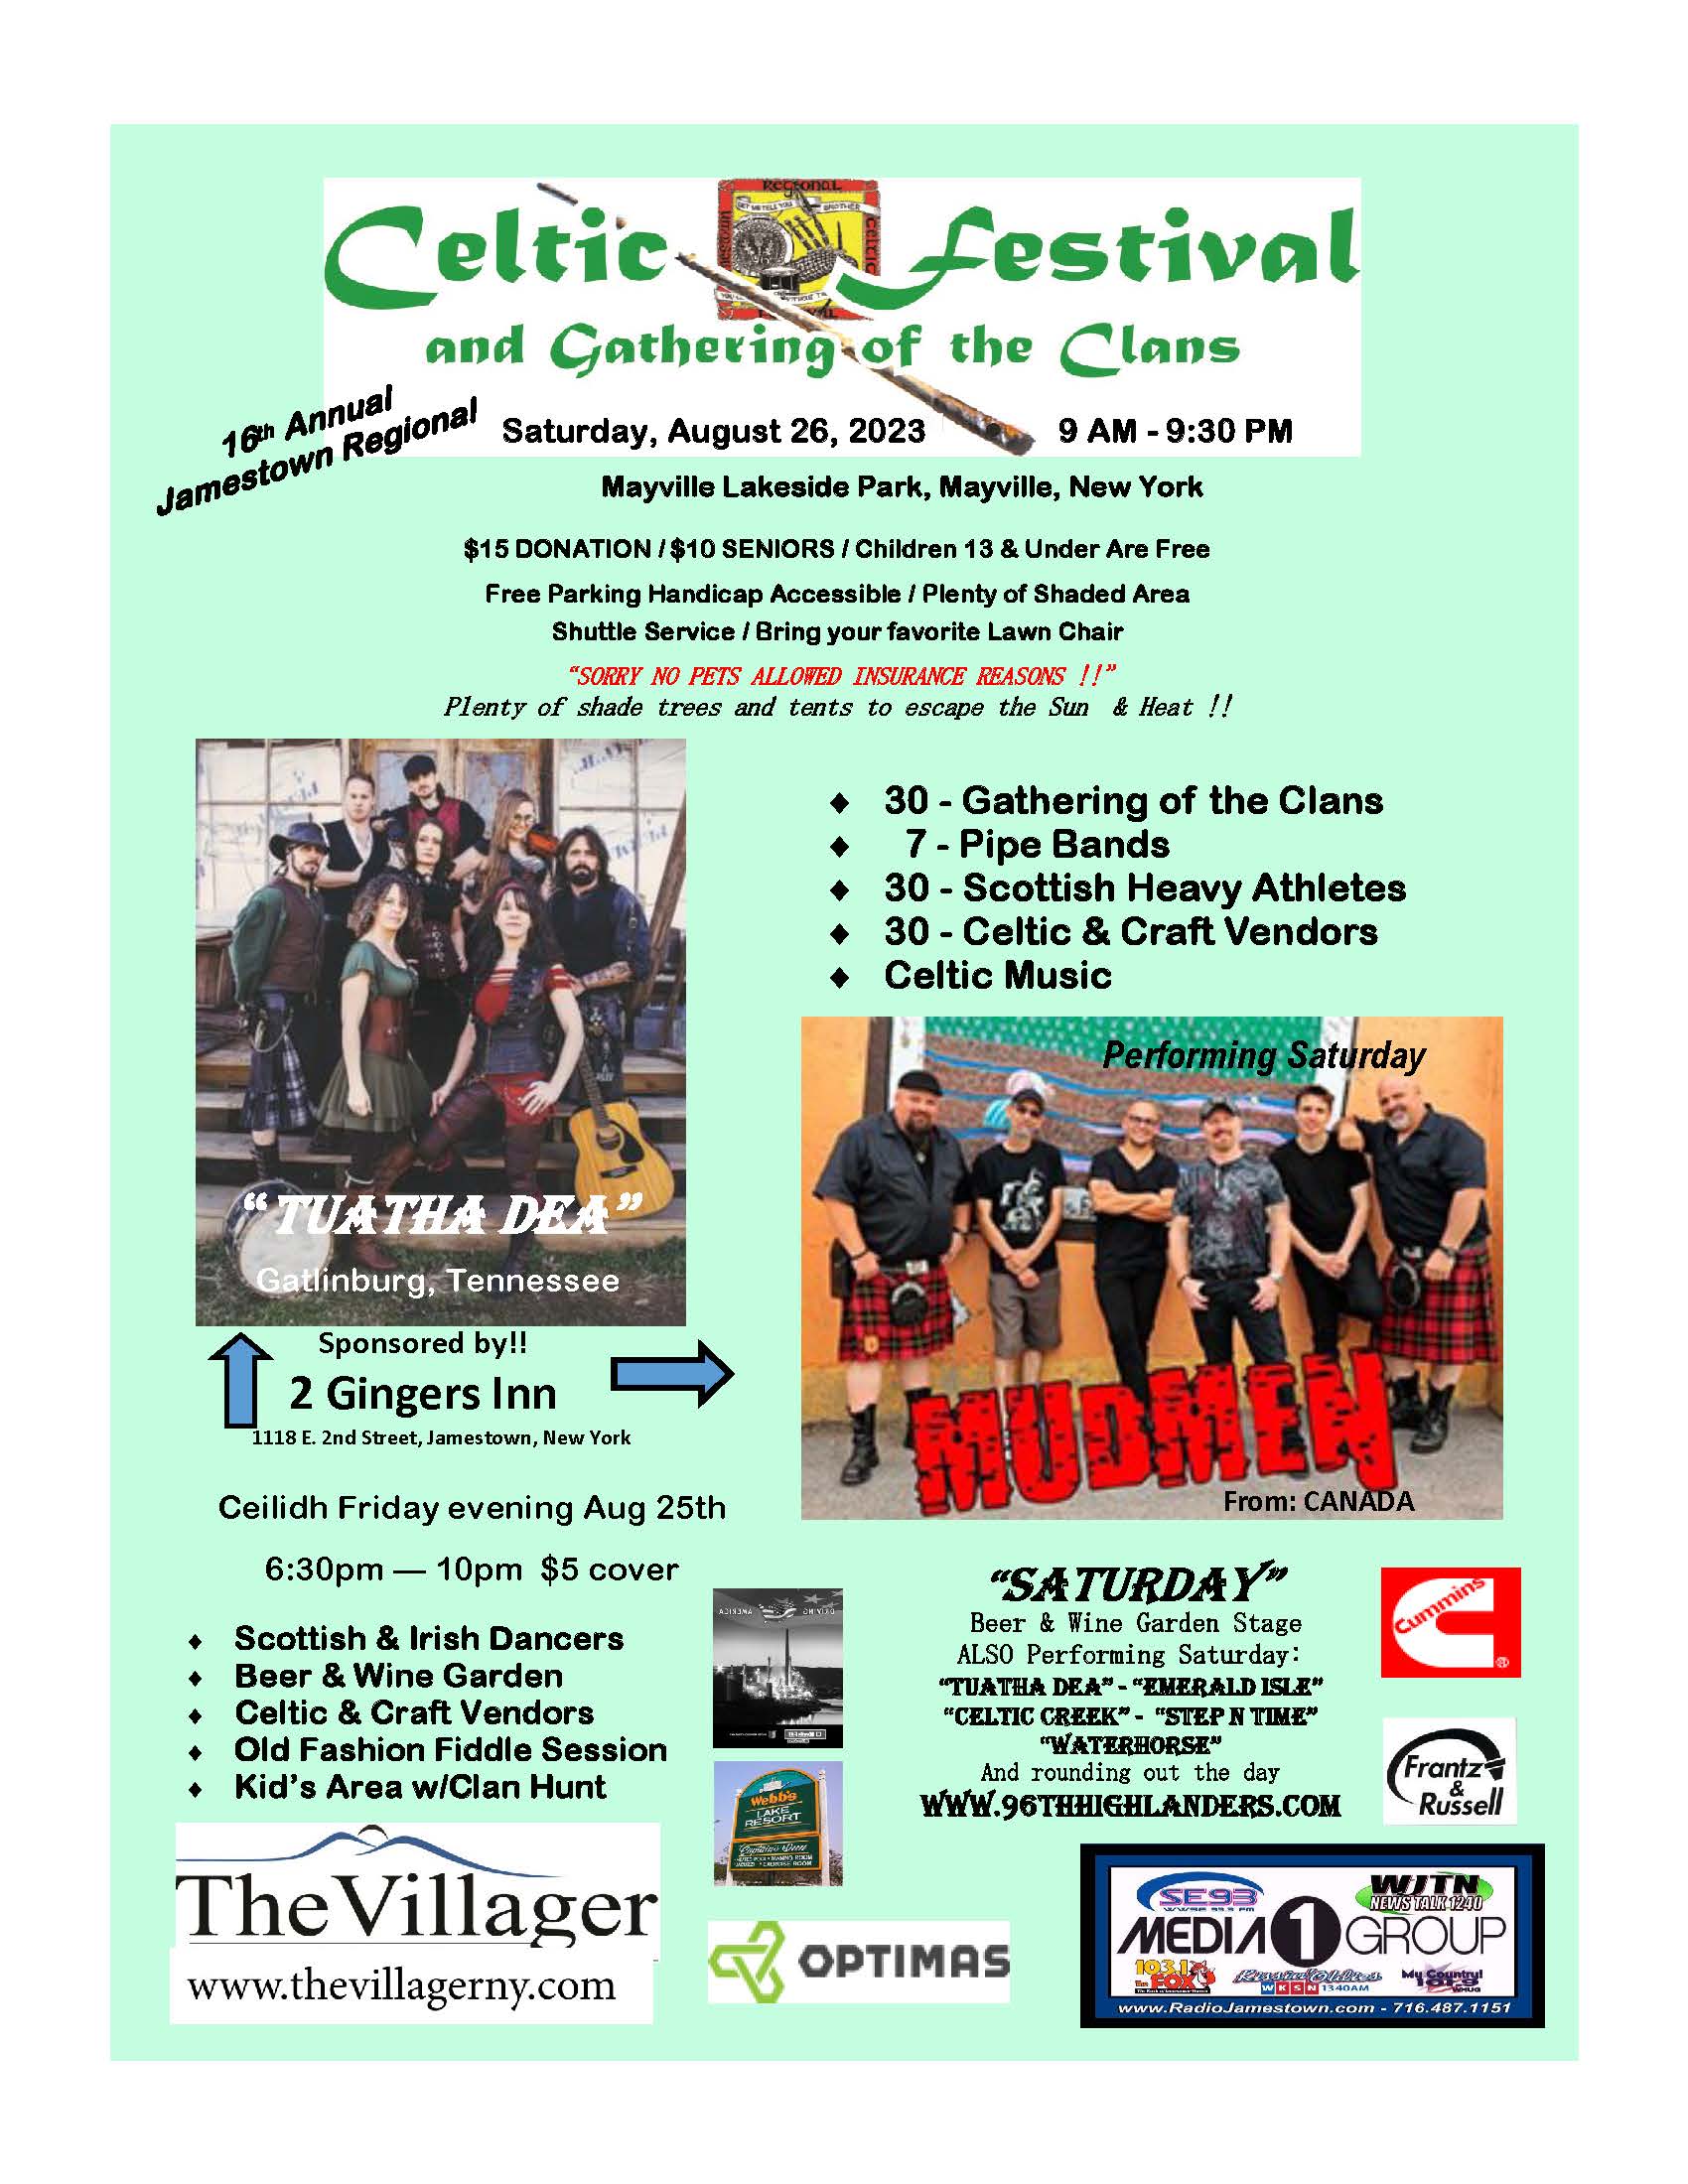 Jamestown Regional Celtic Festival Highland Games and Festivals